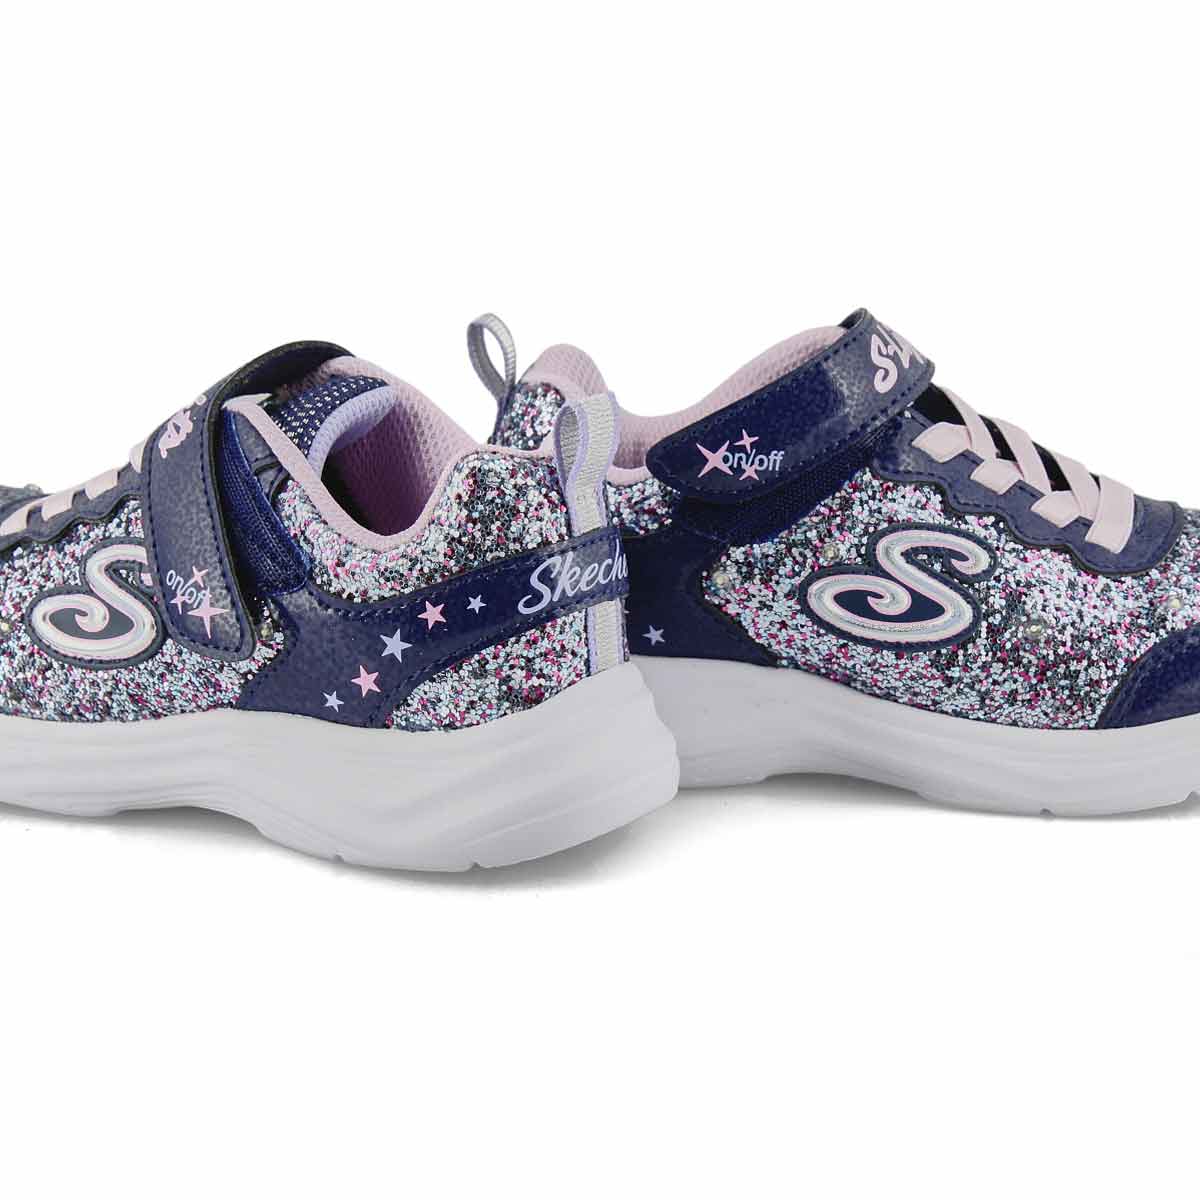 Girls' Glimmer Kicks Sneakers - Navy/Multi